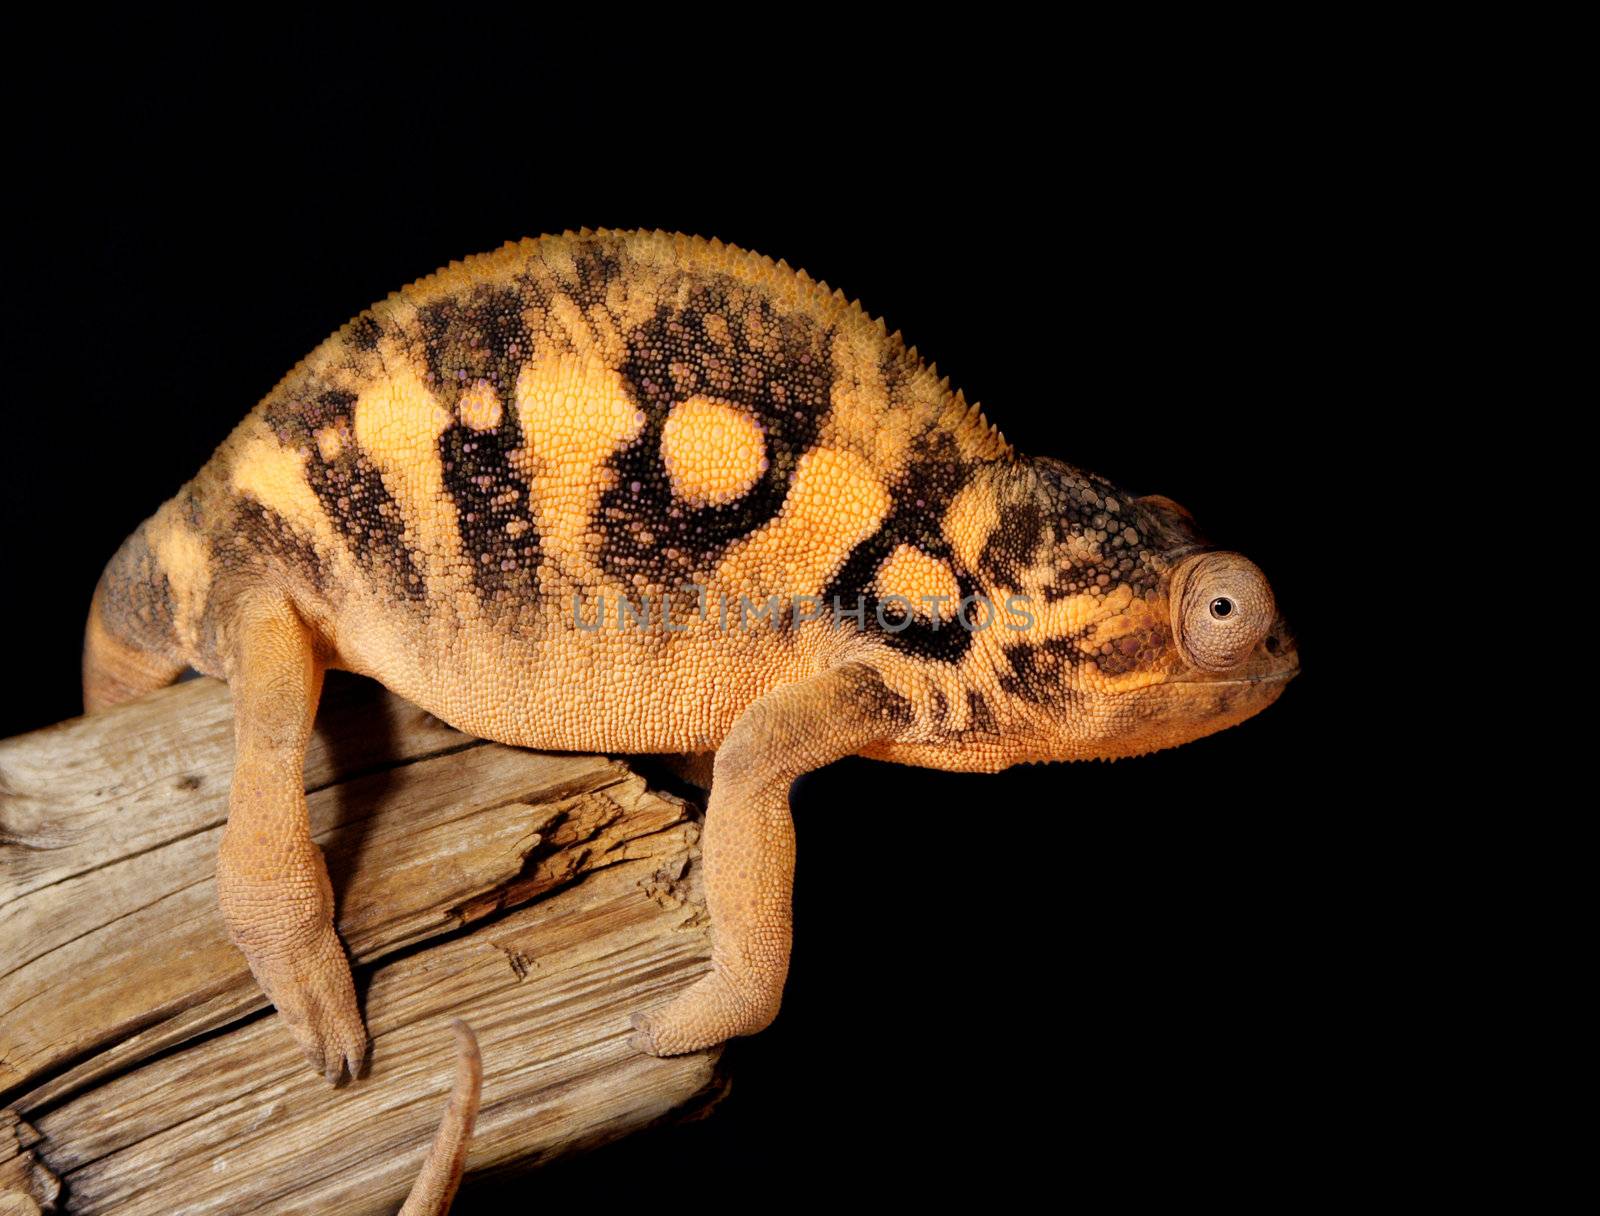 Nice colorful female chameleon lizard